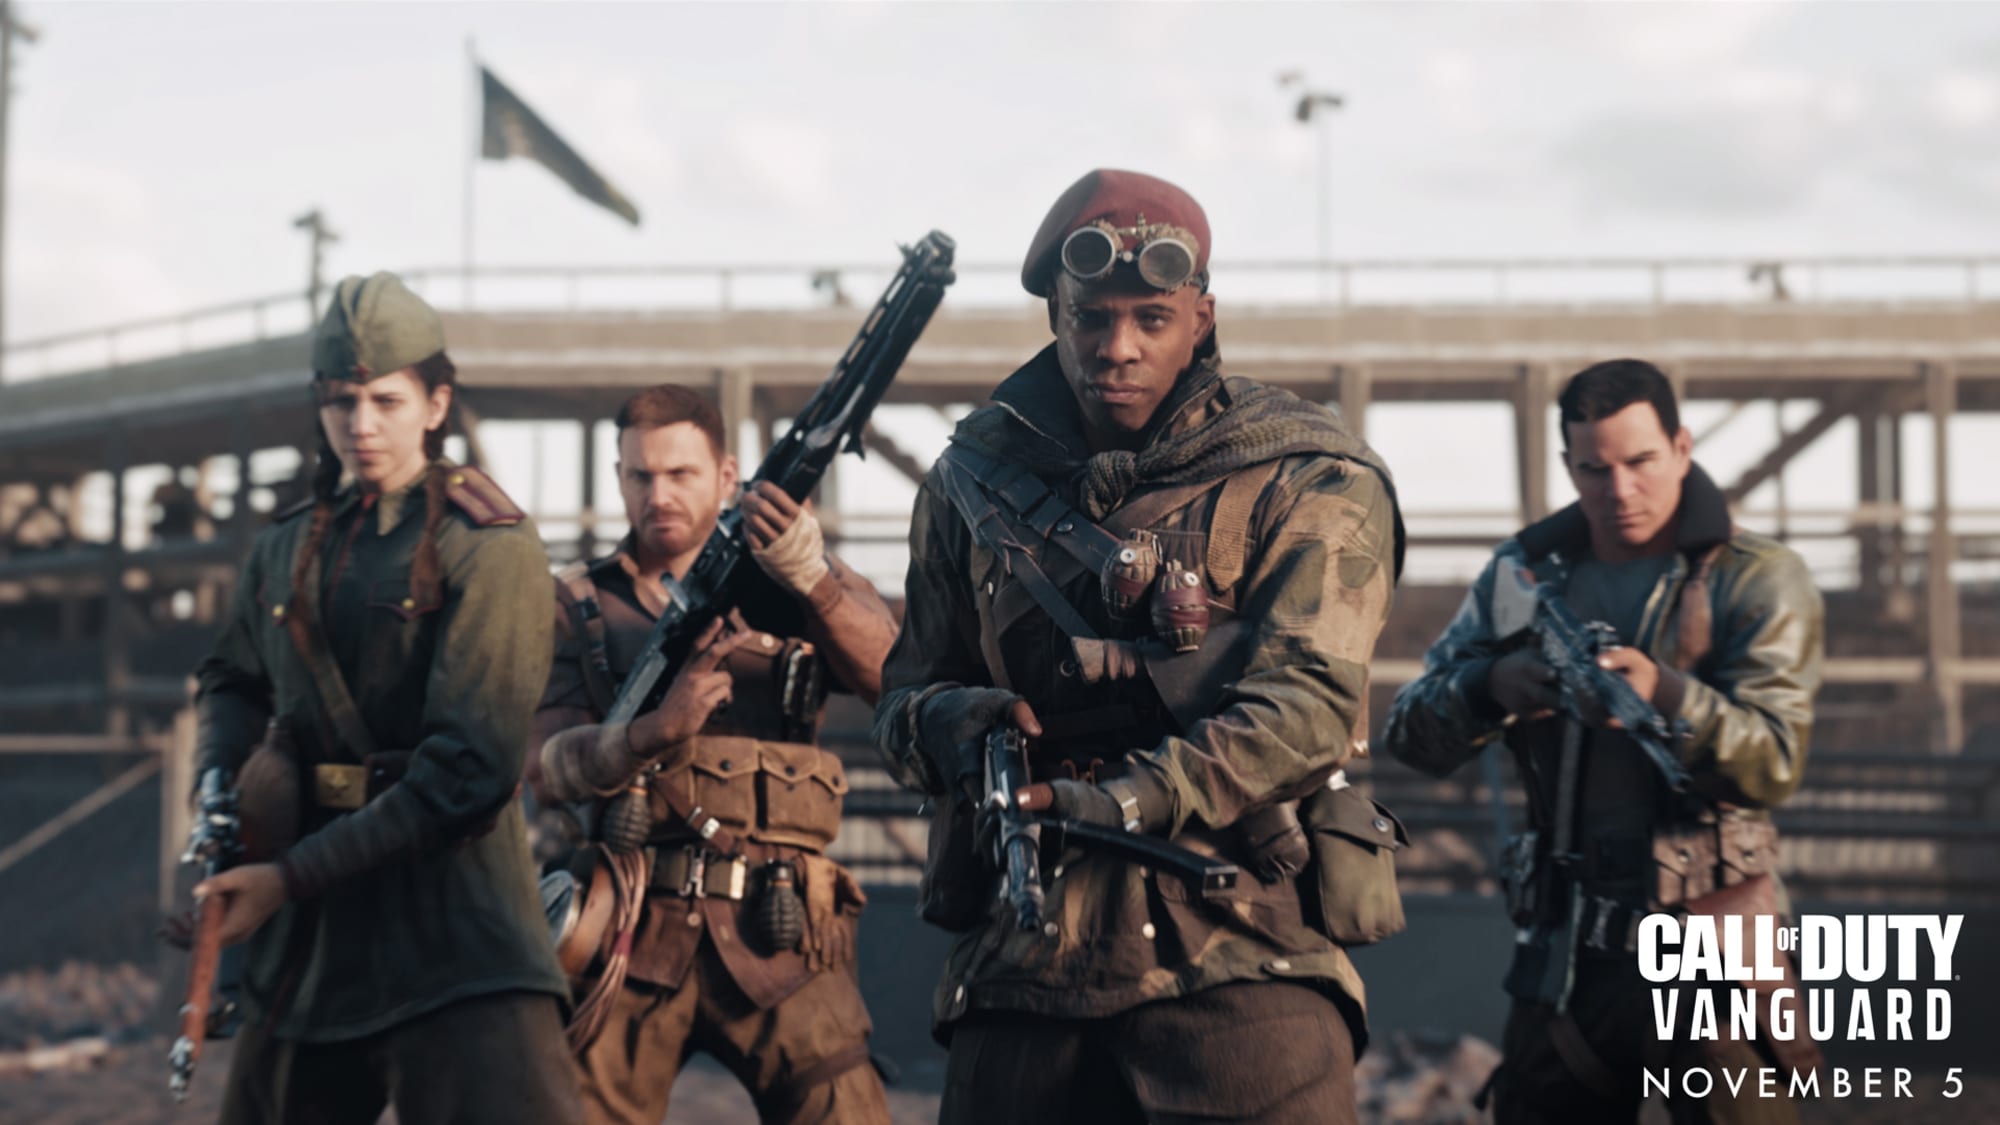 Call of Duty Vanguard review: WW2 shooter is frantic gun fun but